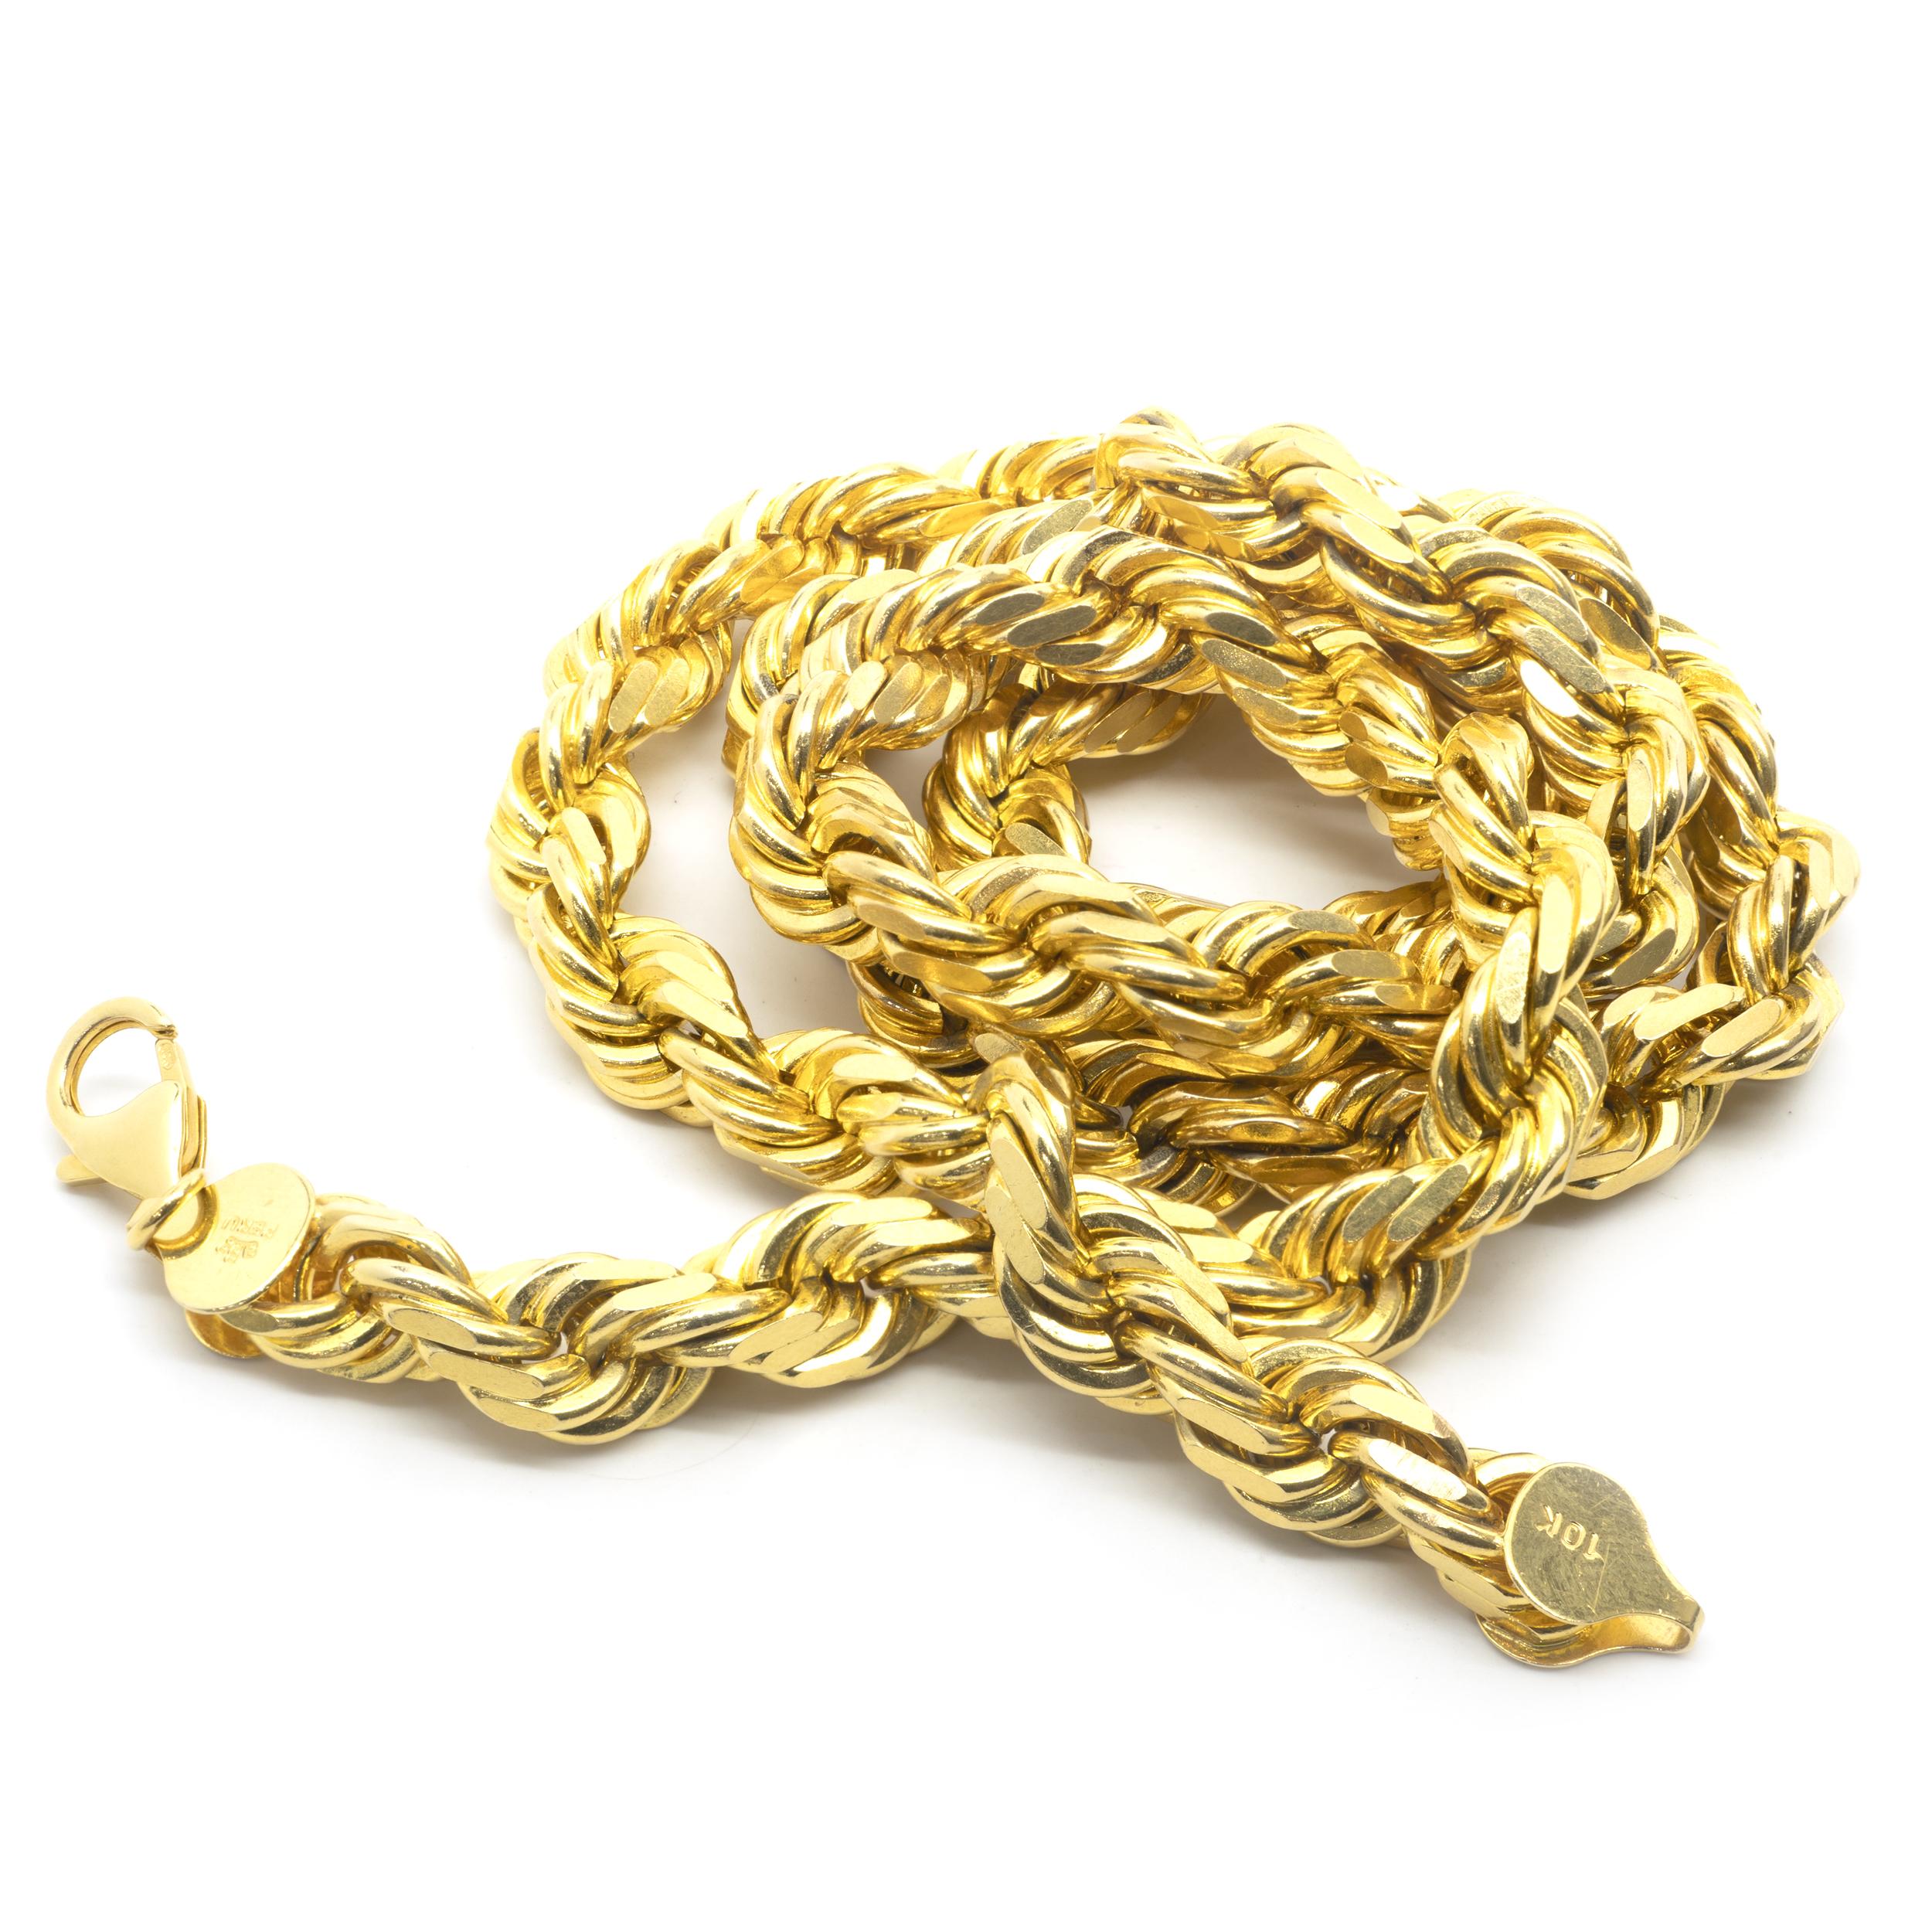 10 karat gold rope necklace